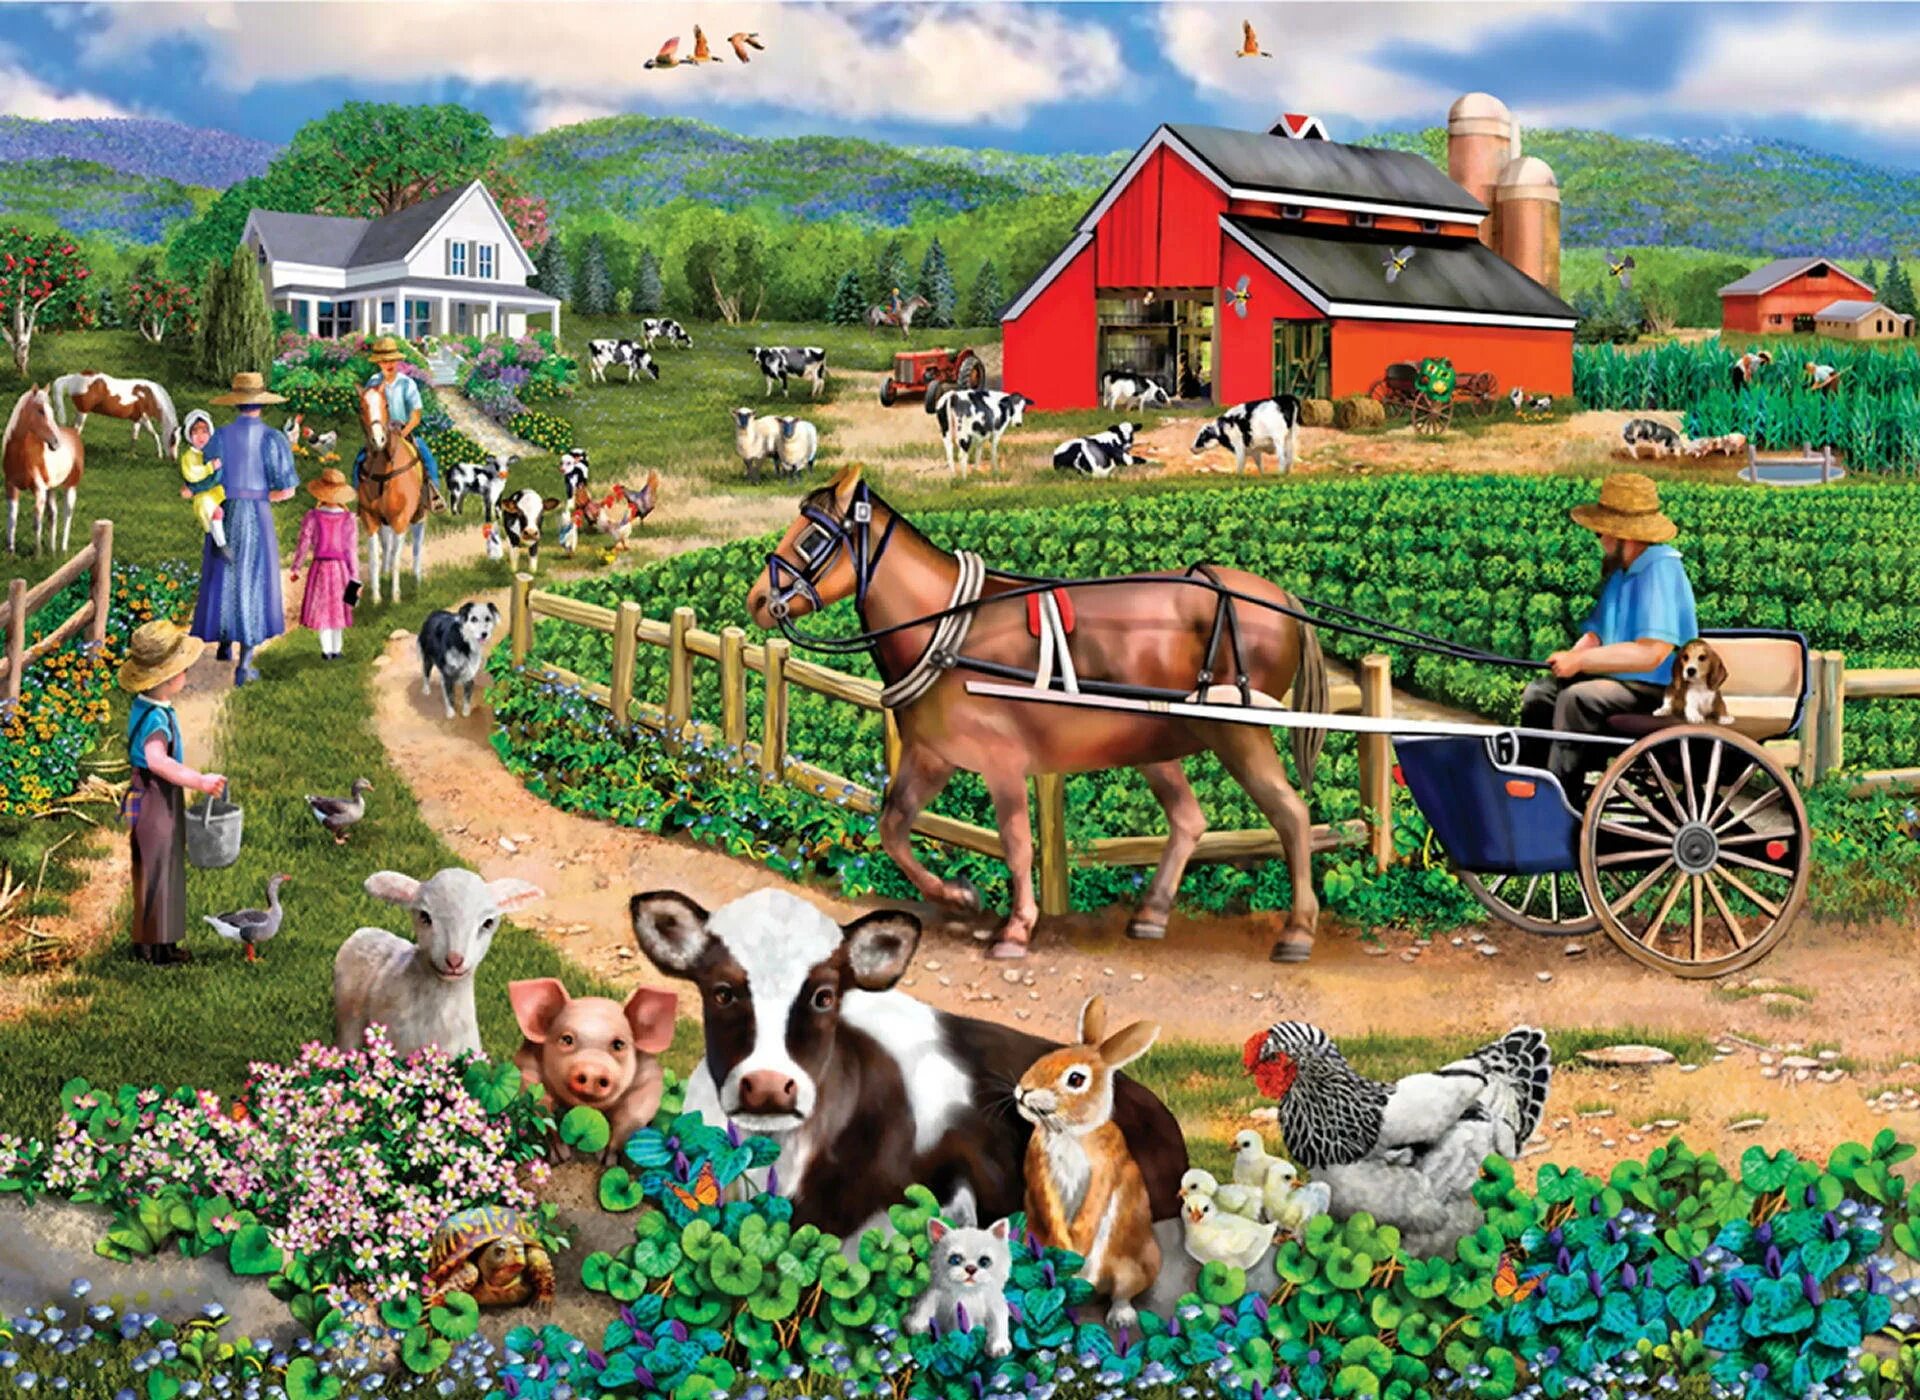 He lives on the farm. Ферма картина. Ферма иллюстрация. Ферма картинка для детей. Американская ферма иллюстрации.